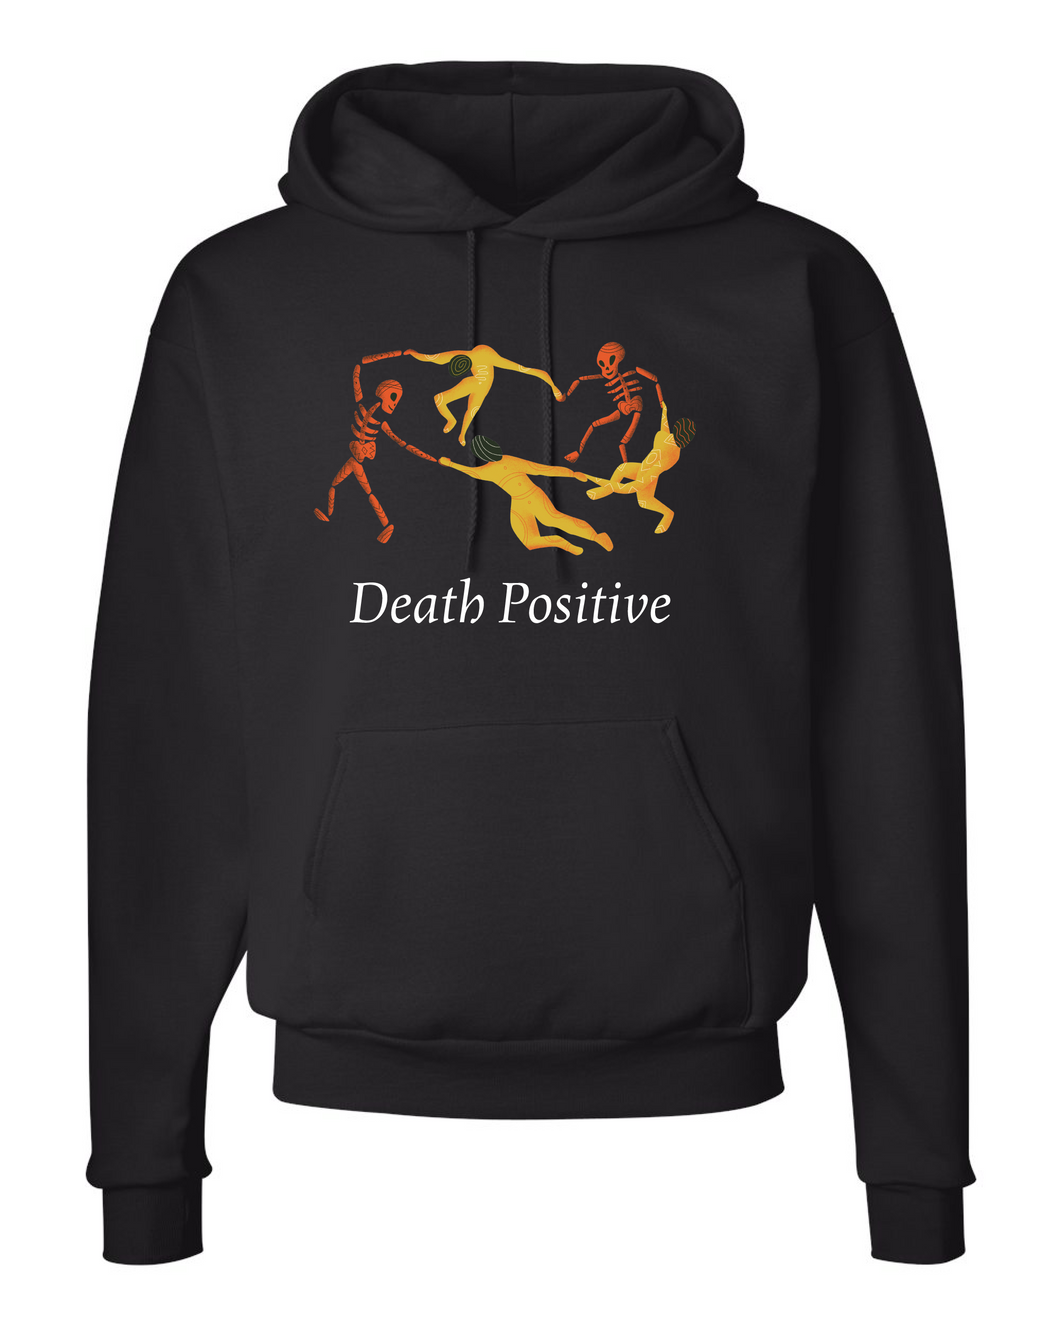 Dancing Death Positive Hooded Sweatshirt